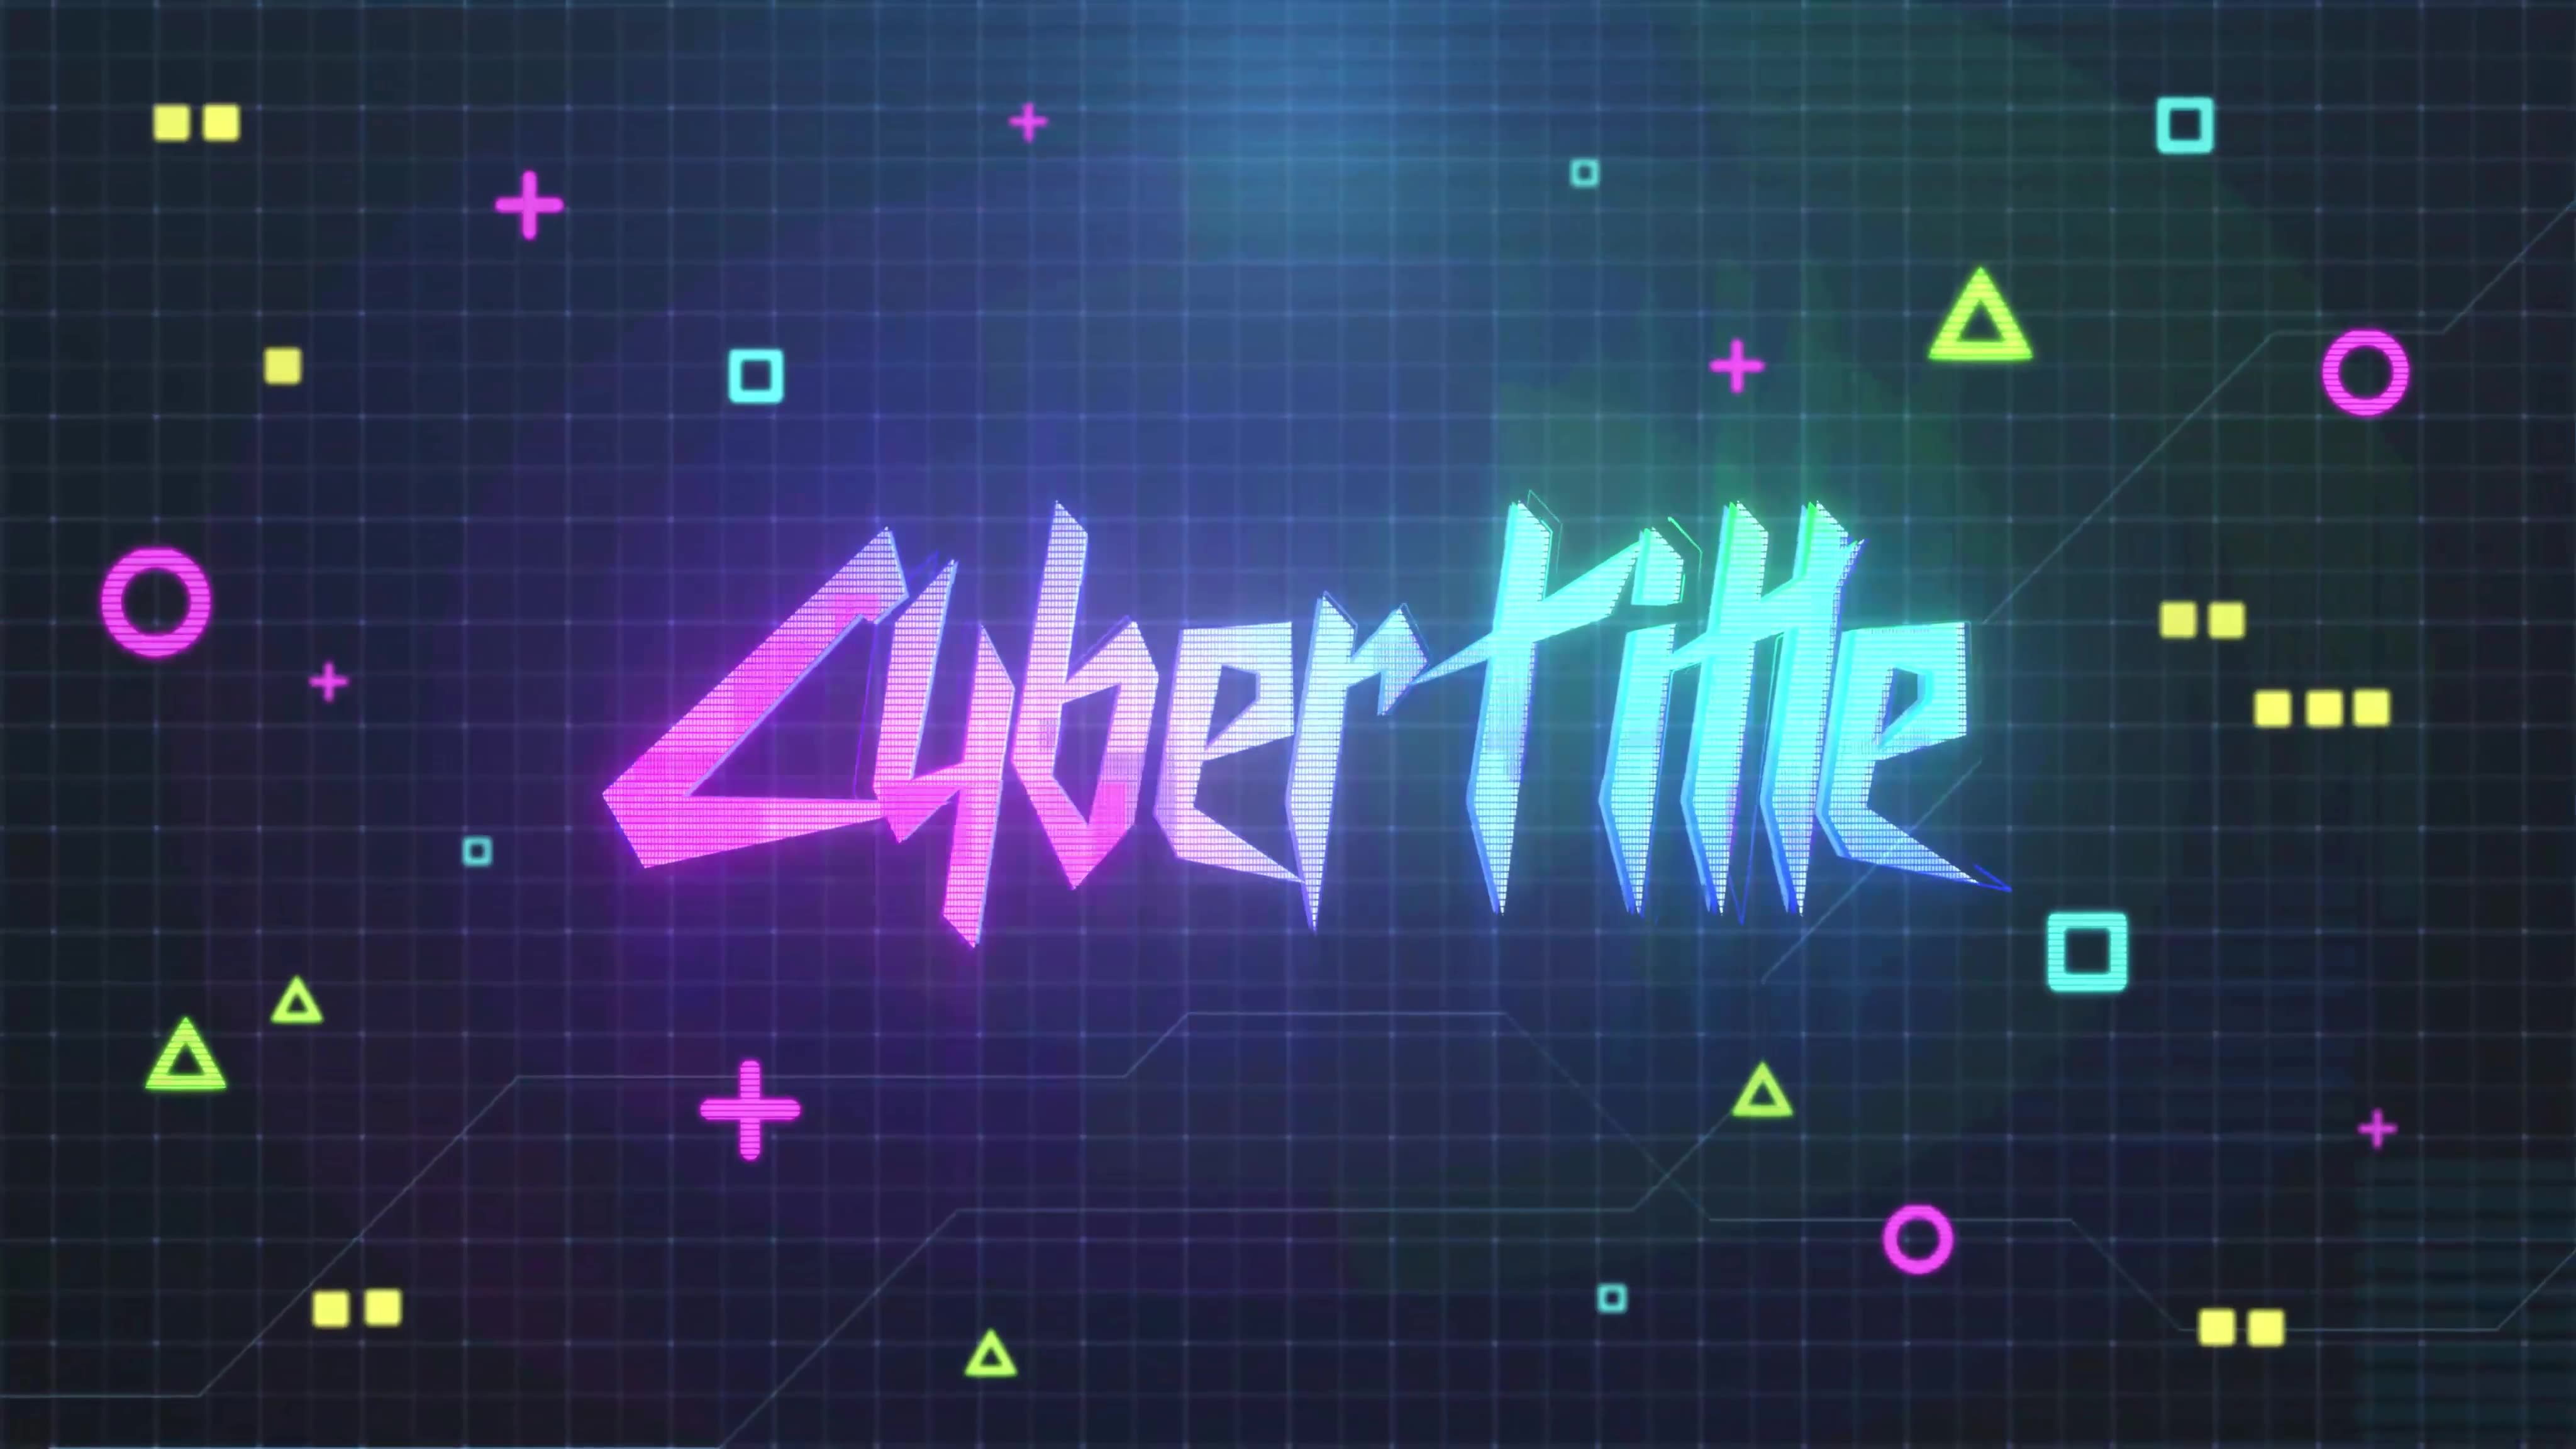 cyberpunk logo after effects download